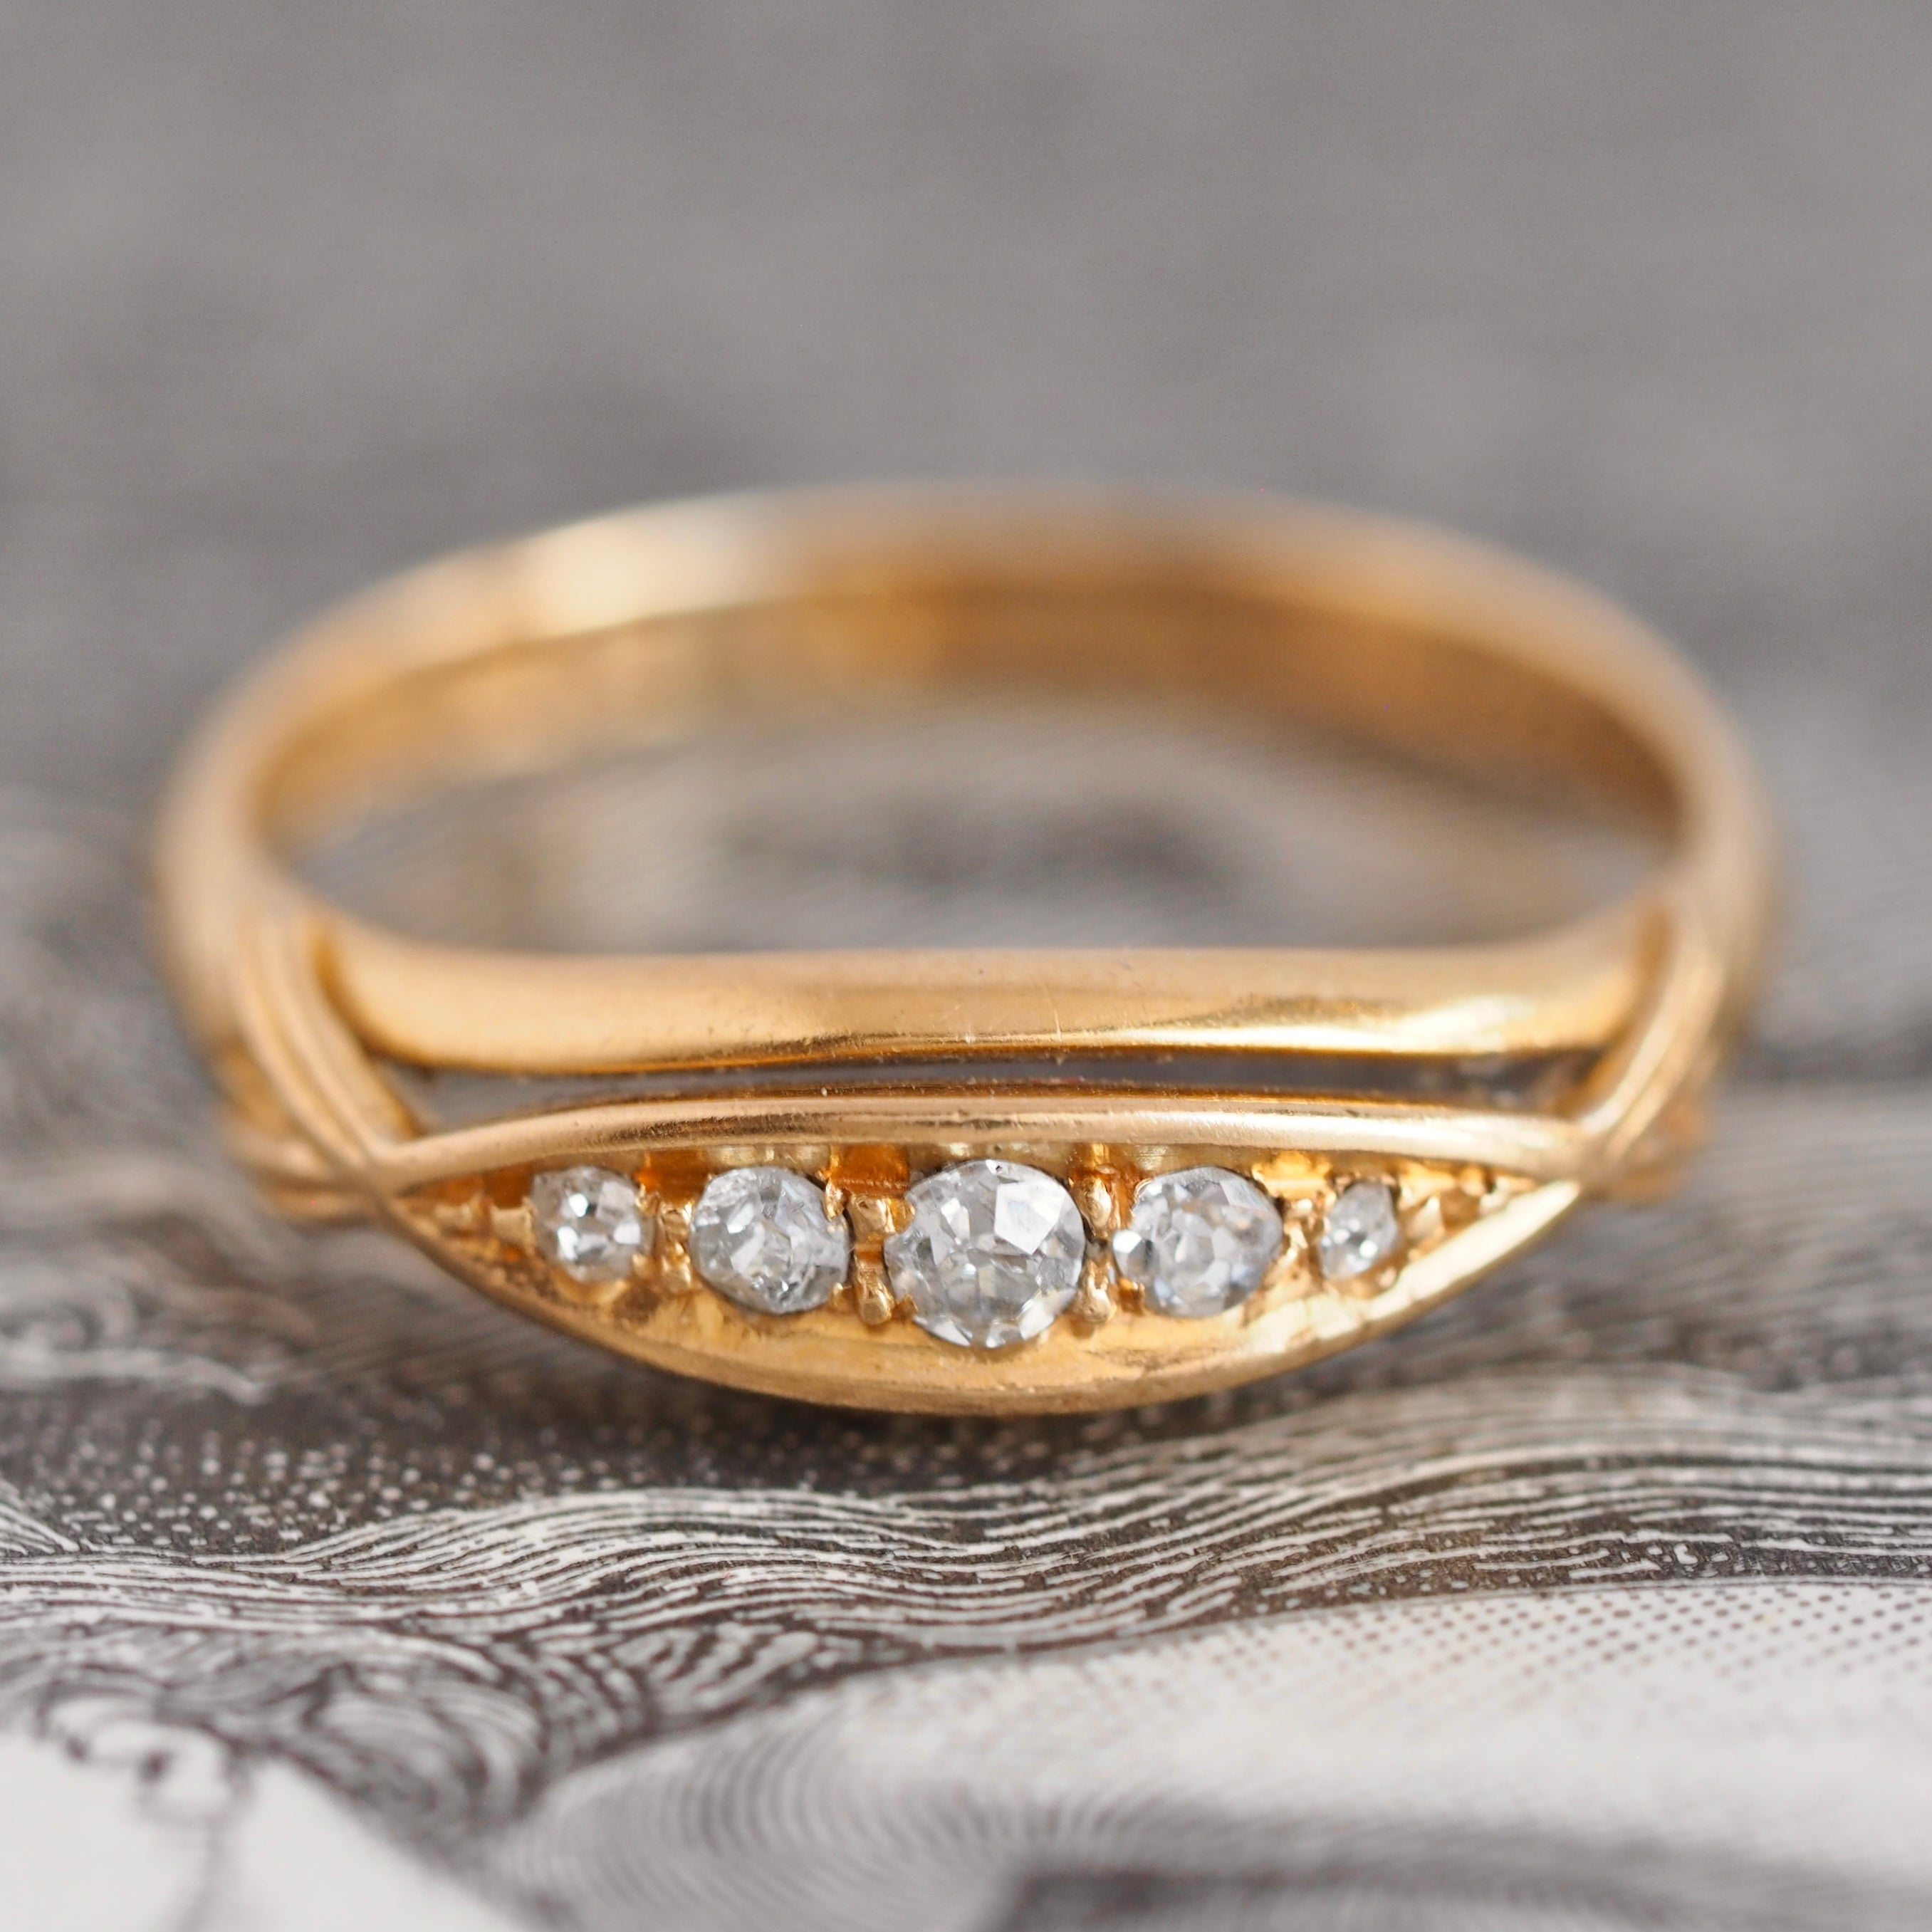 Antique Edwardian c. 1910 18k Gold Old Mine Cut Diamond Boat Ring